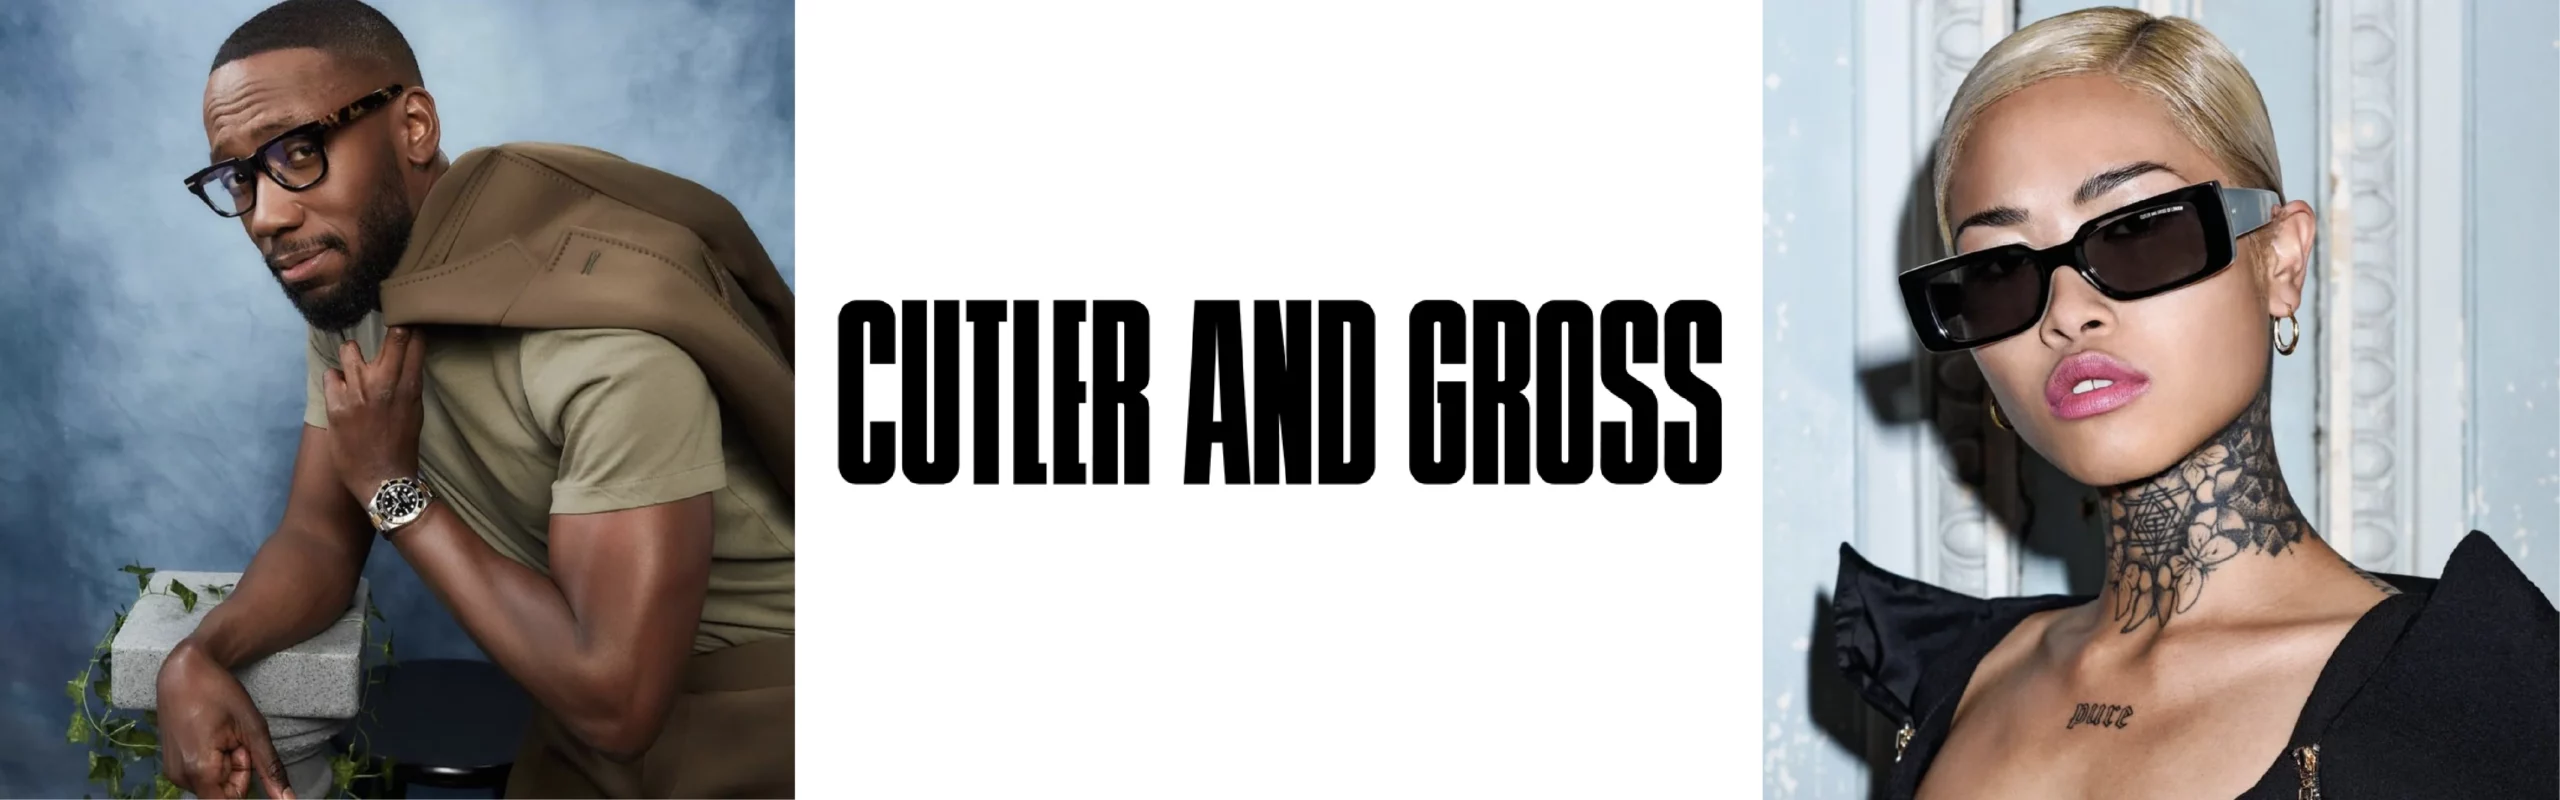 cutler_and_gross.ai_-01